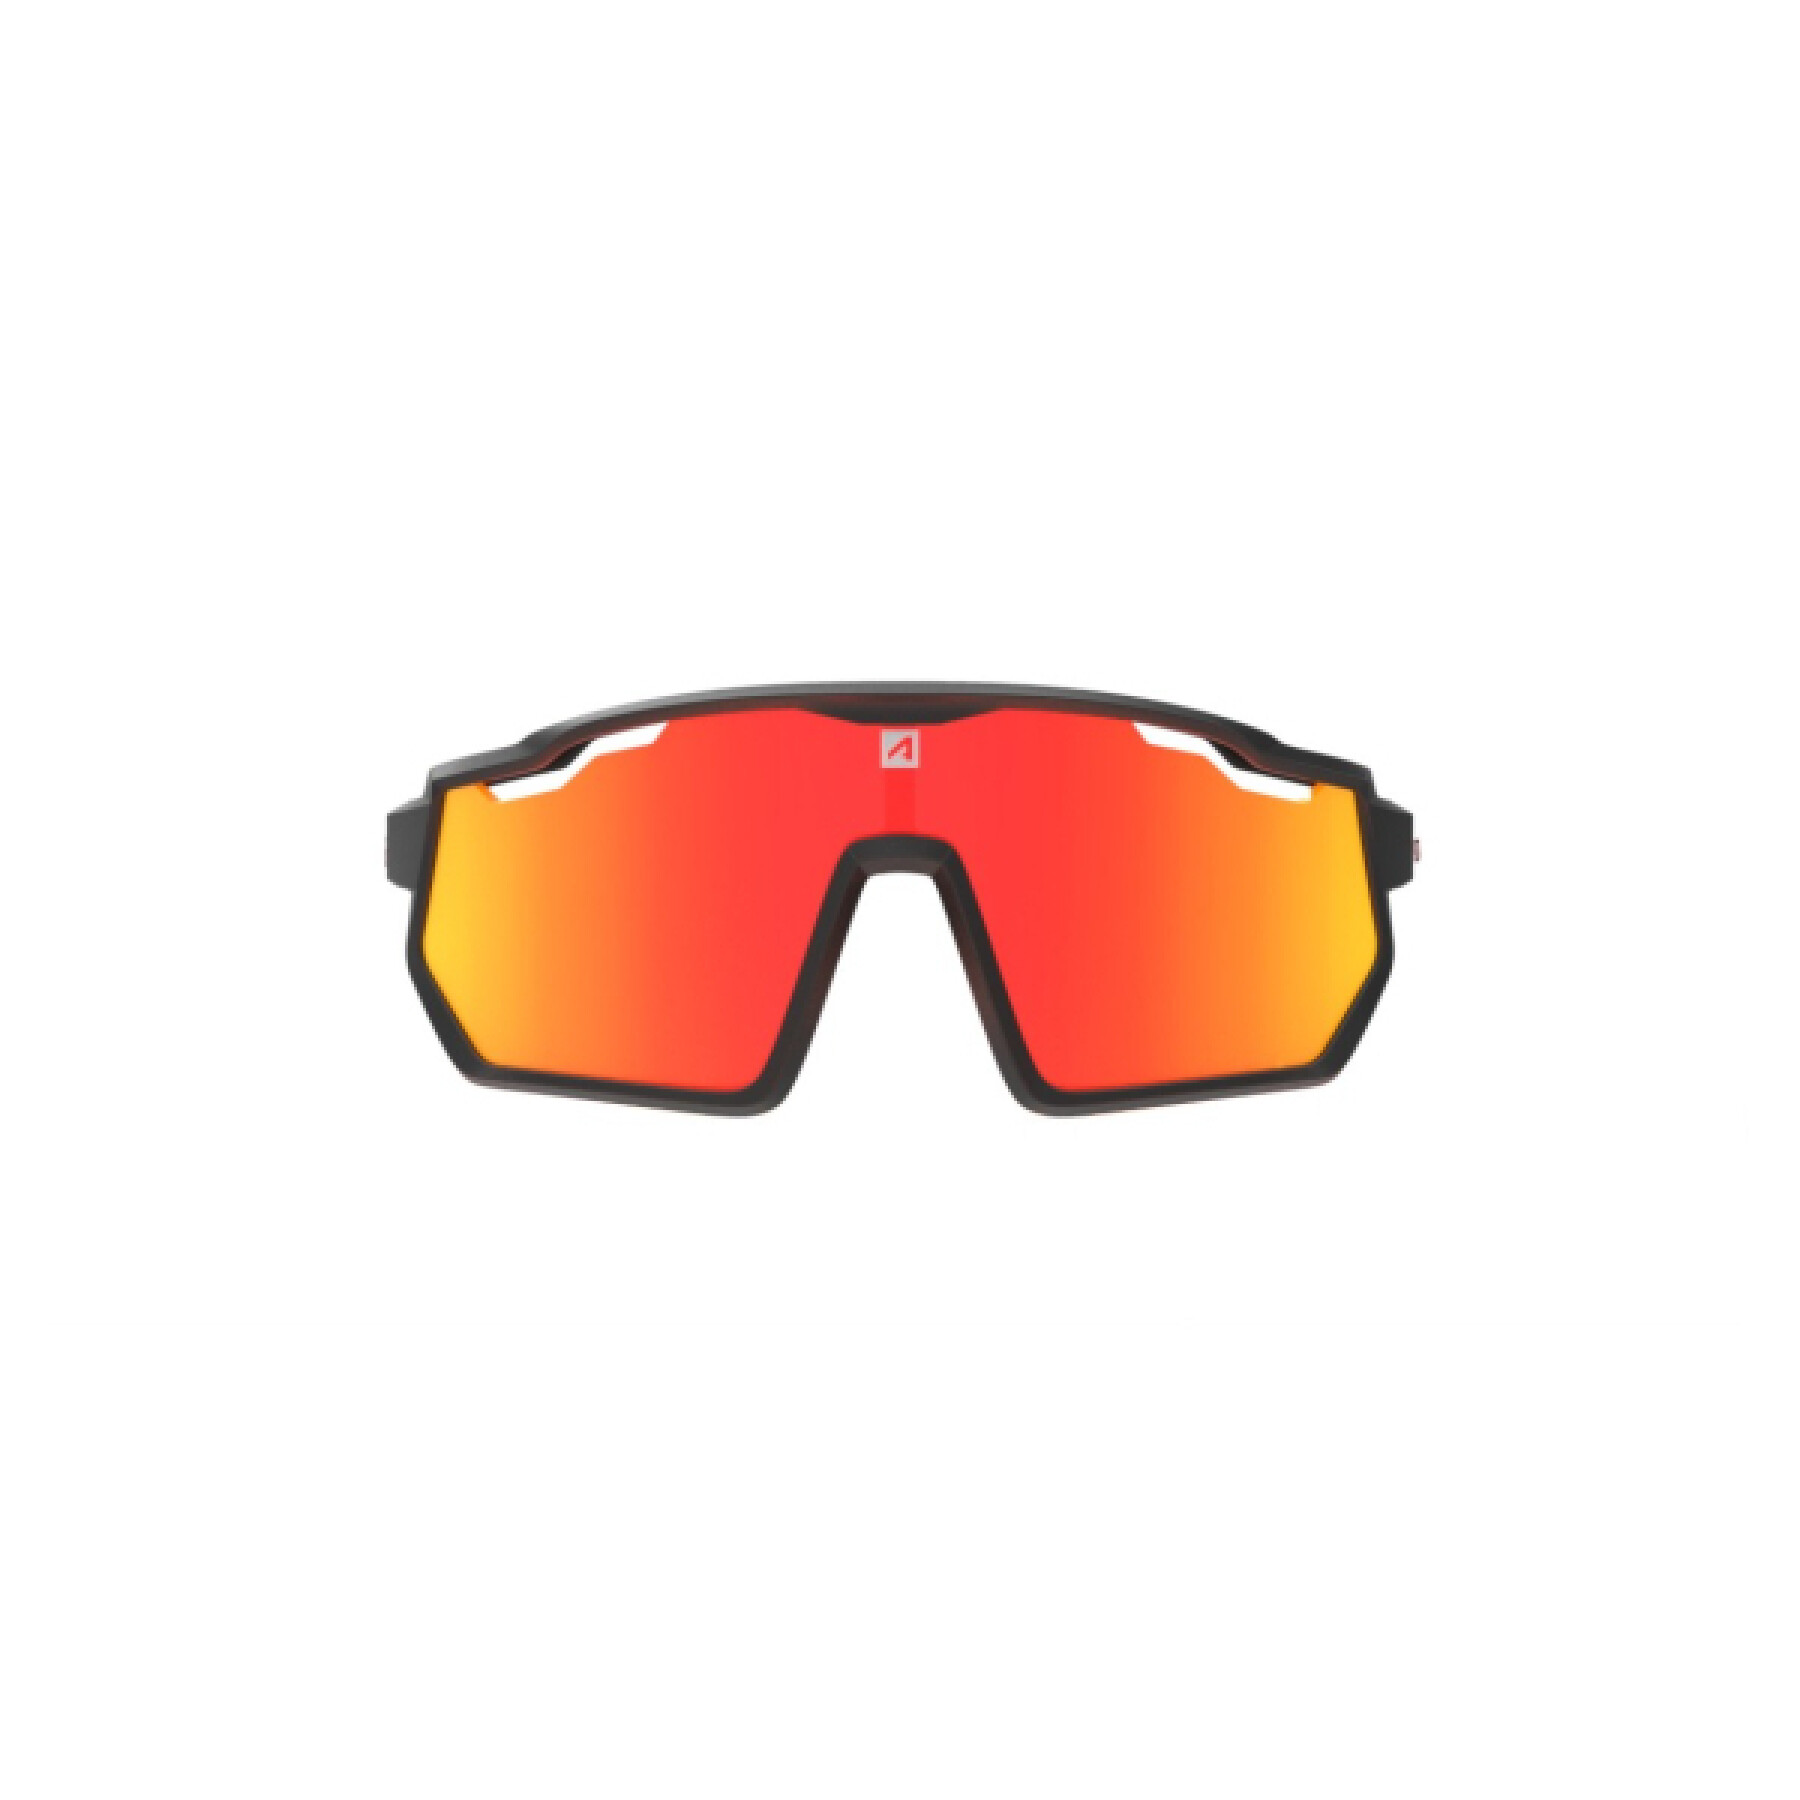 Óculos de sol para crianças AZR Pro Pro Race